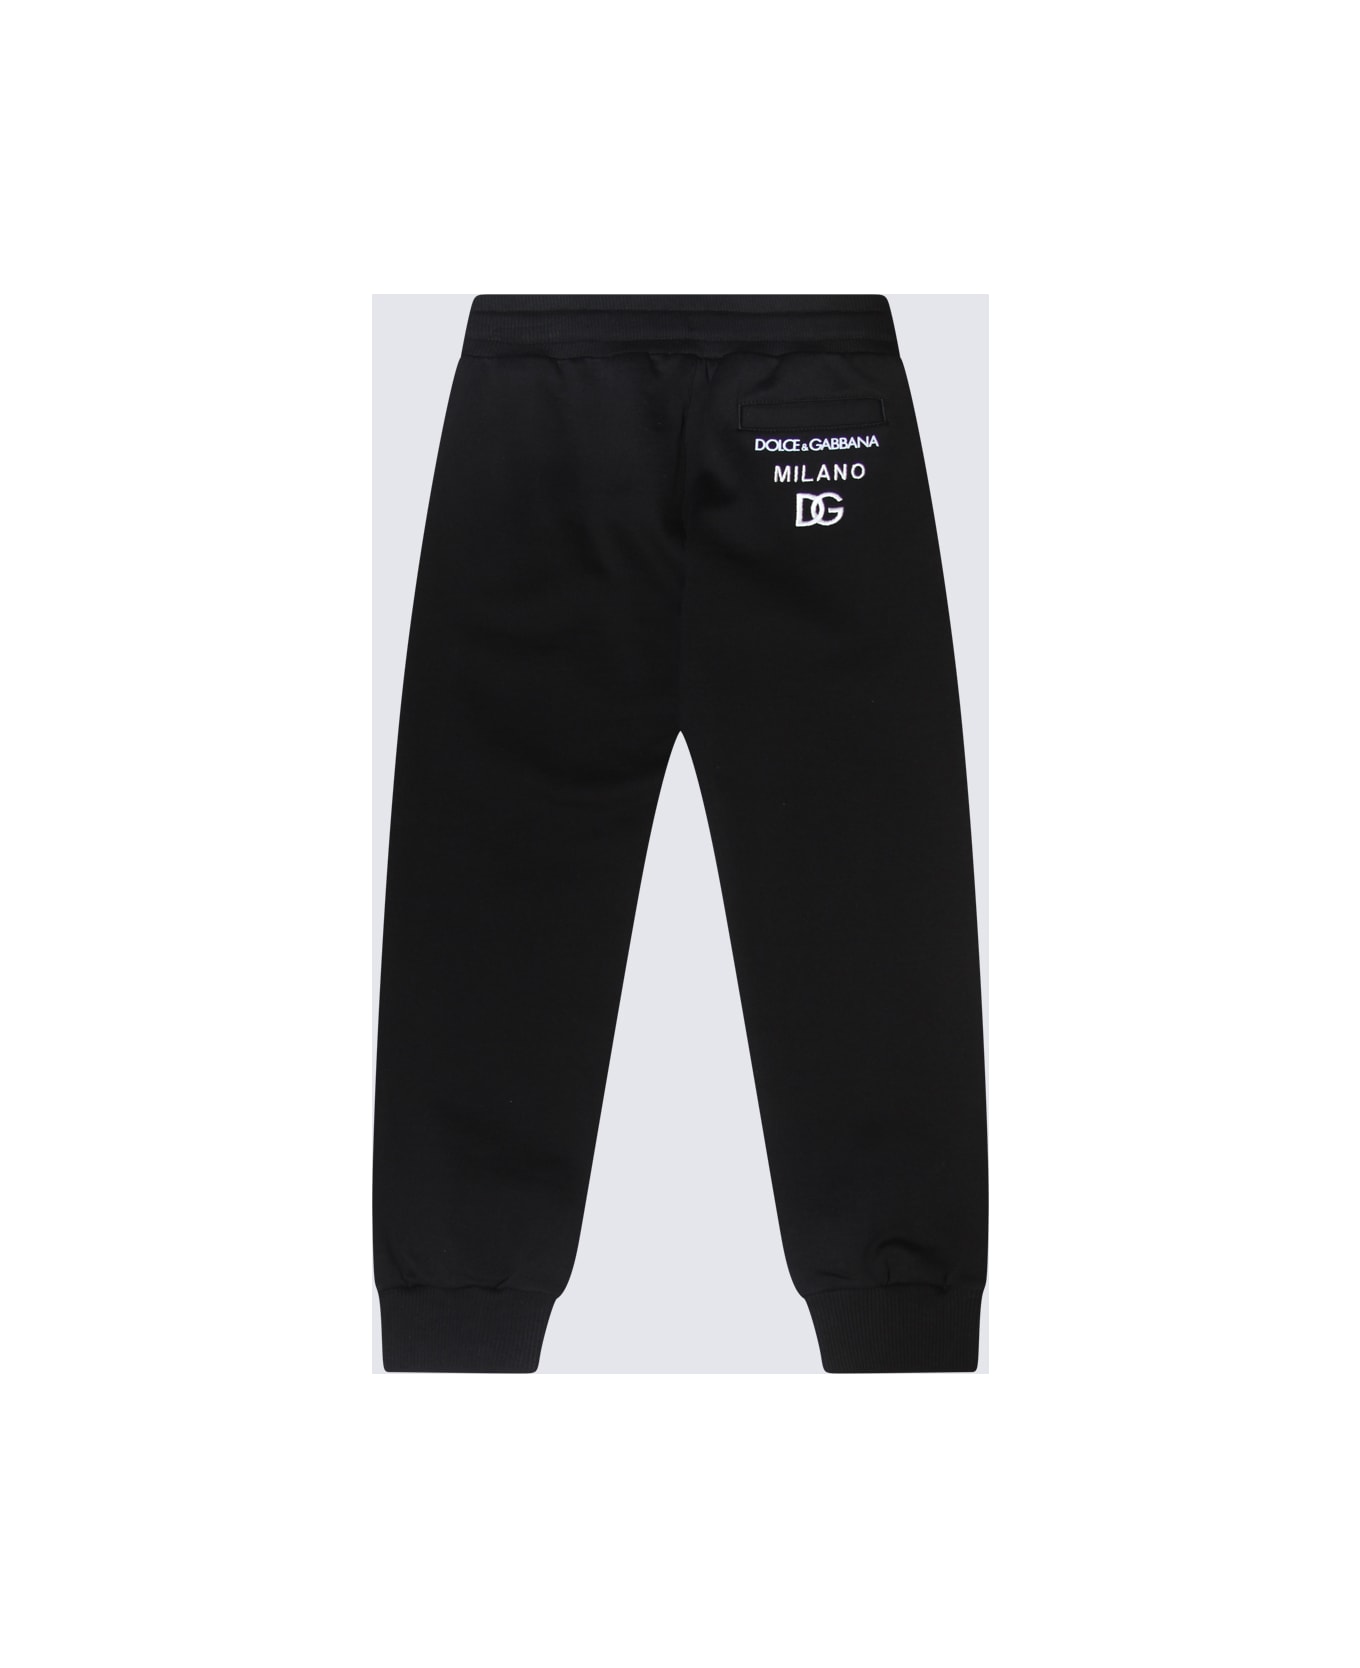 Dolce & Gabbana Black Cotton Track Pants - Black